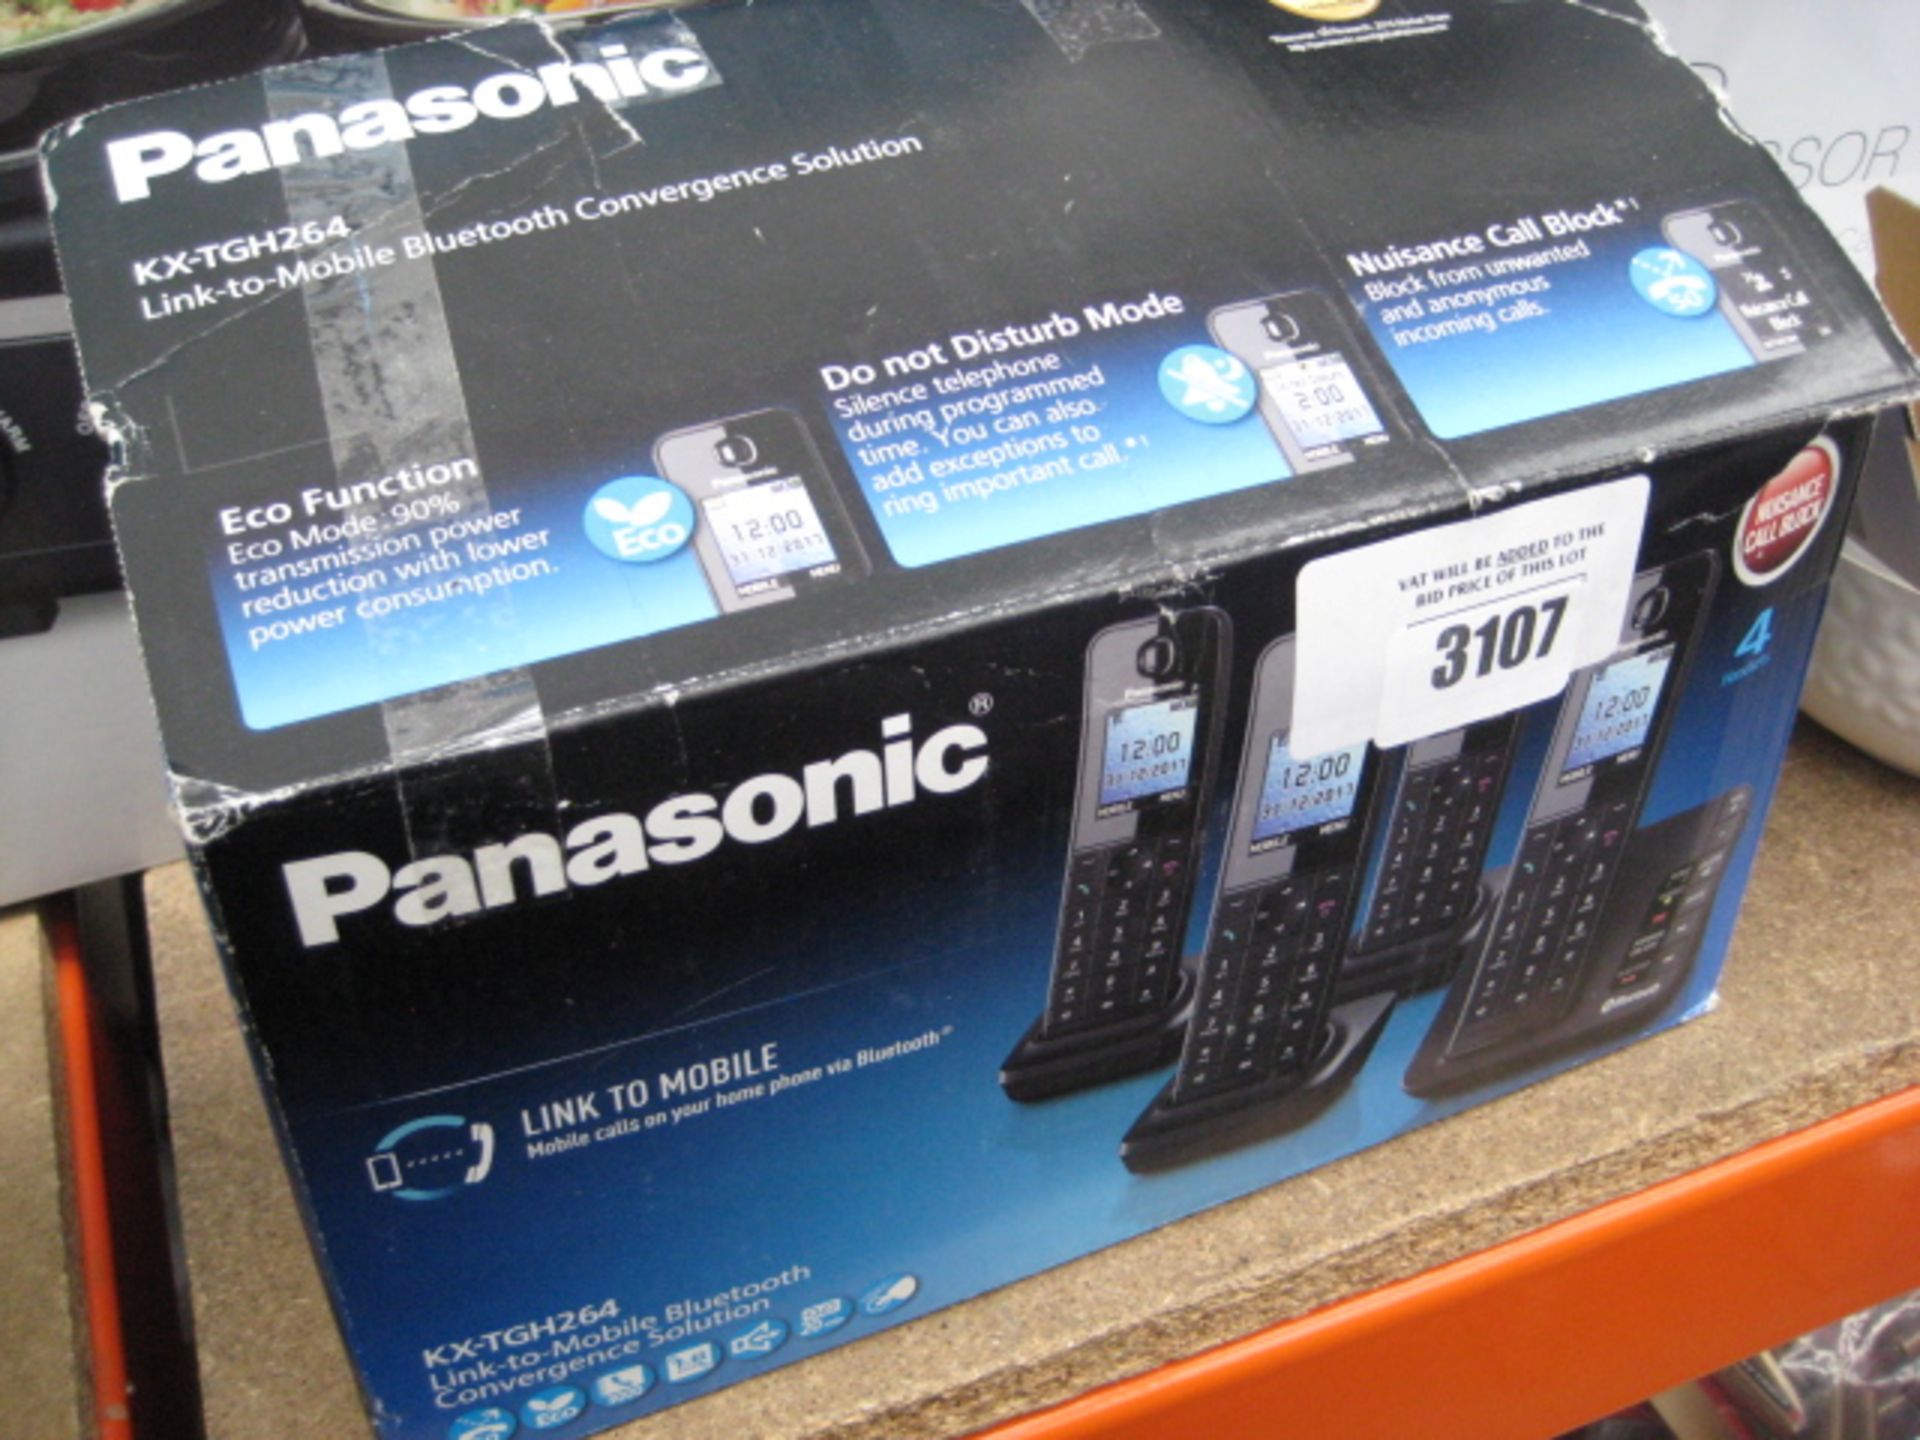 Panasonic KXTGH264 digital cordless answering system